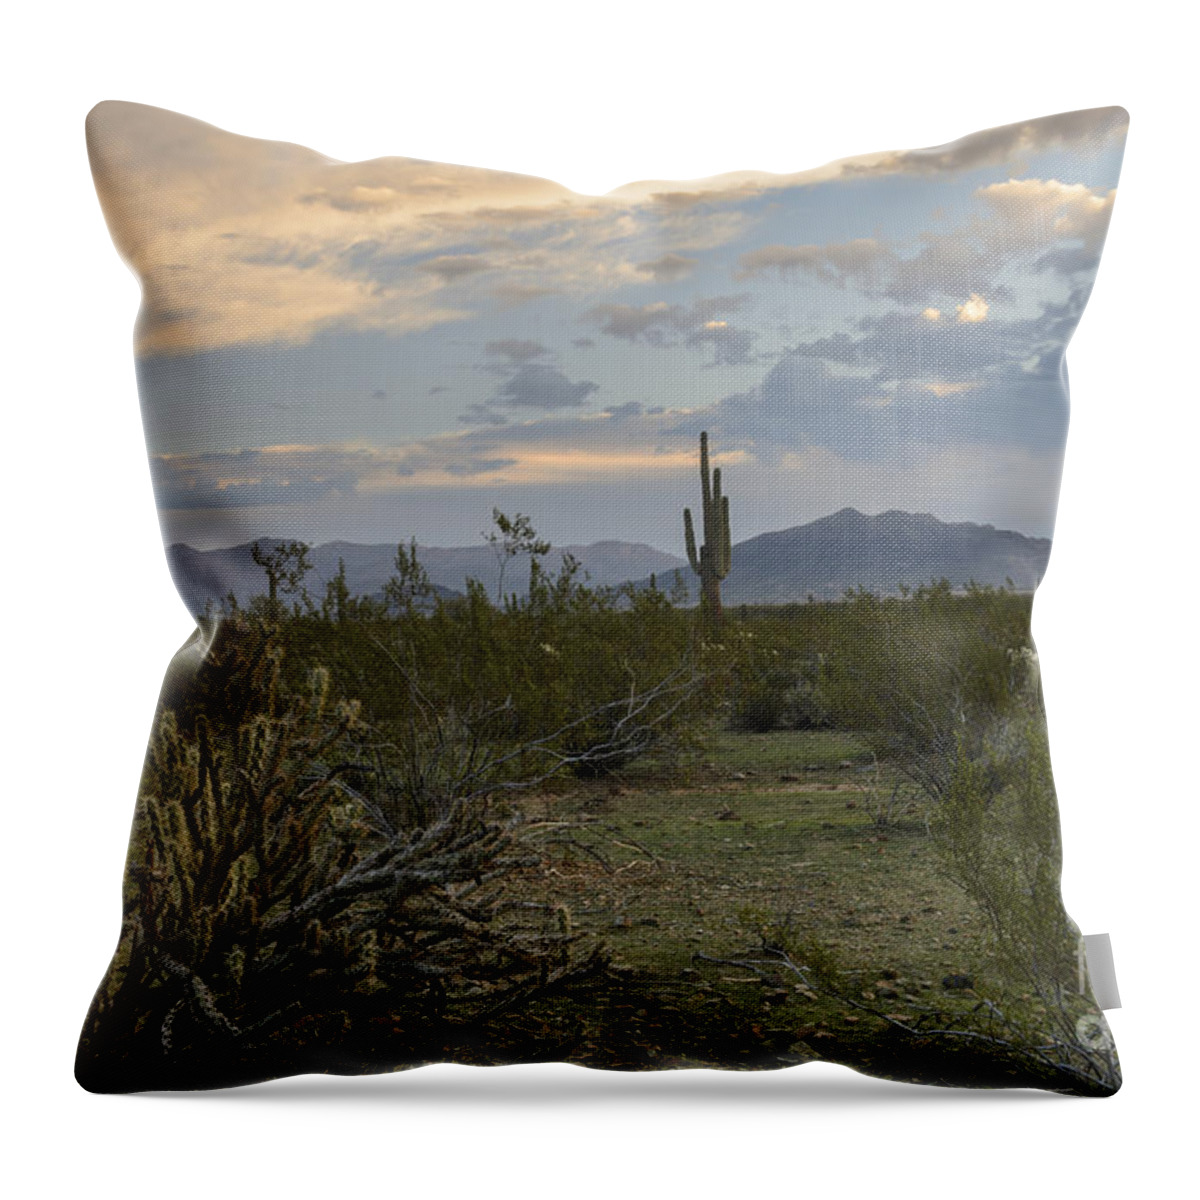 Sonoran Desert Throw Pillow featuring the photograph Sonoran Desert Morning by Tamara Becker